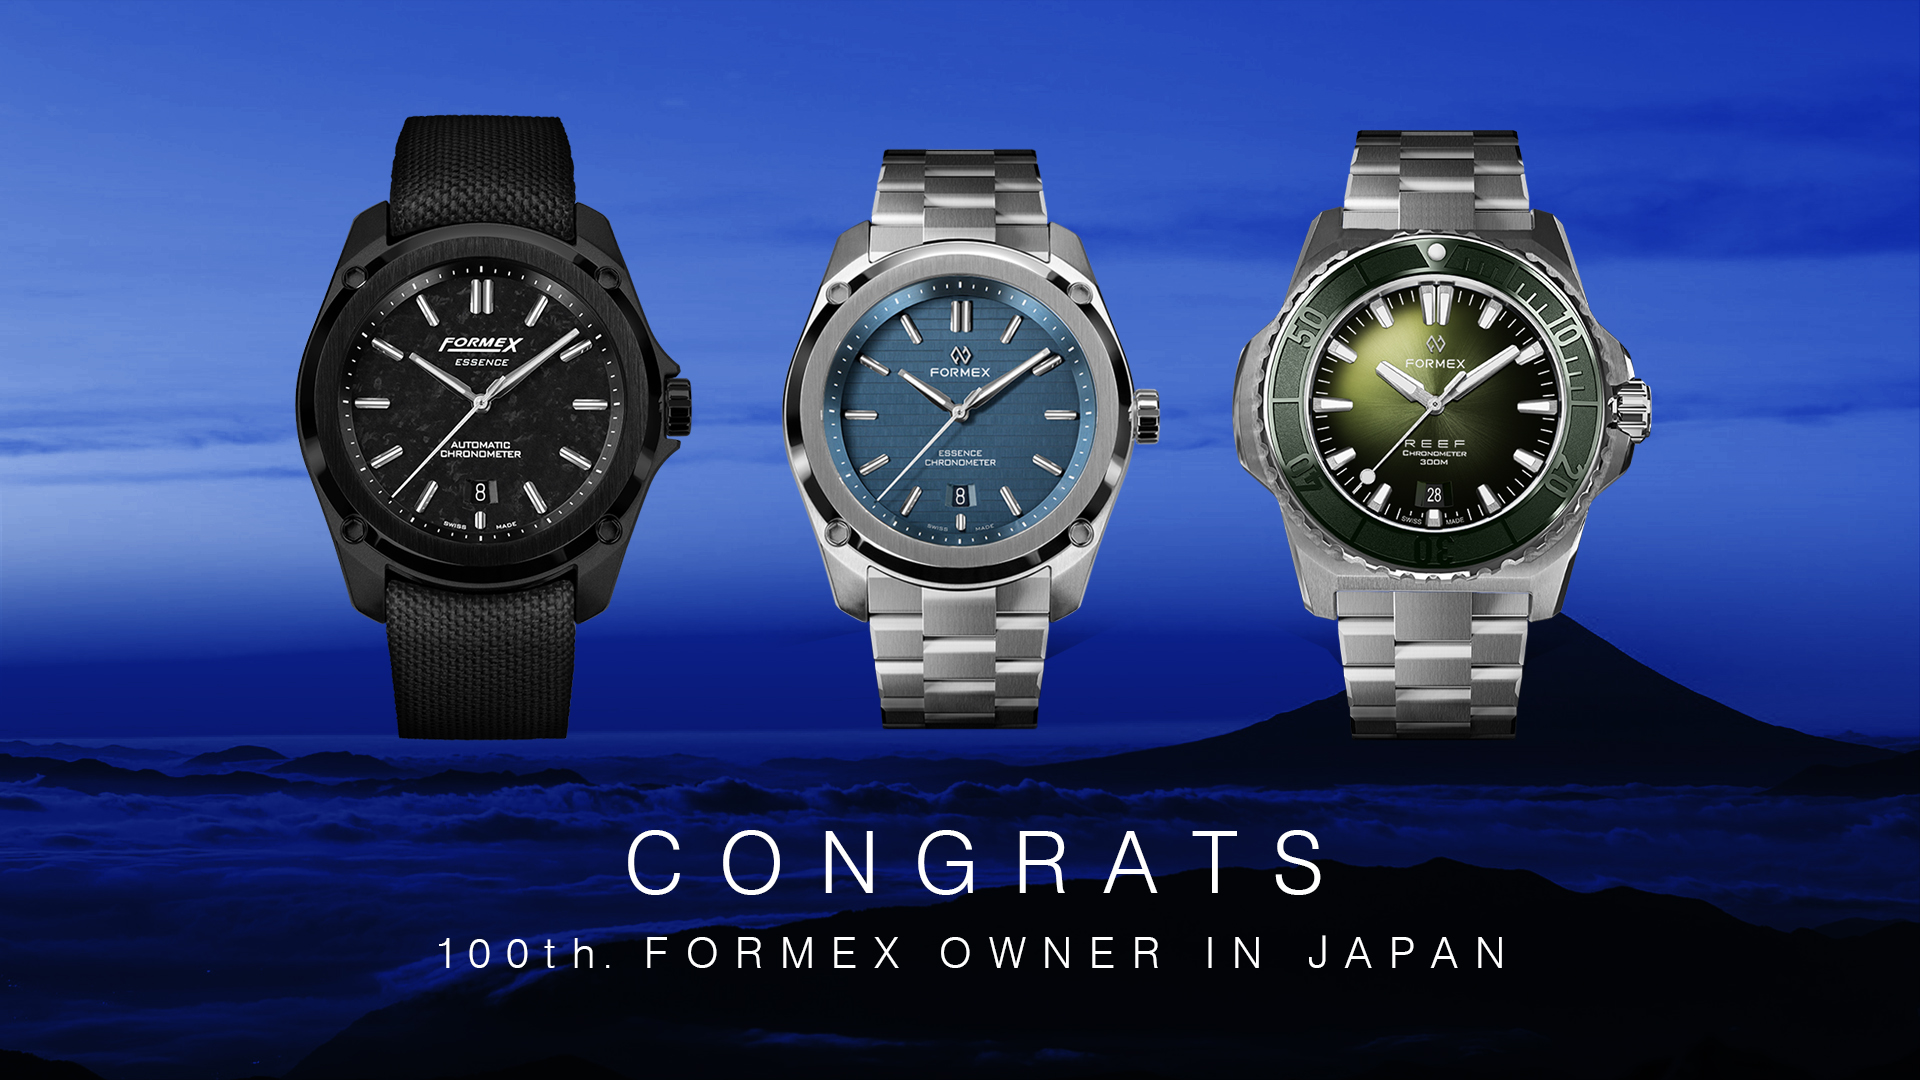 FORMEXが新興スイス高級腕時計ブランドとしては異例となる国内販売本数